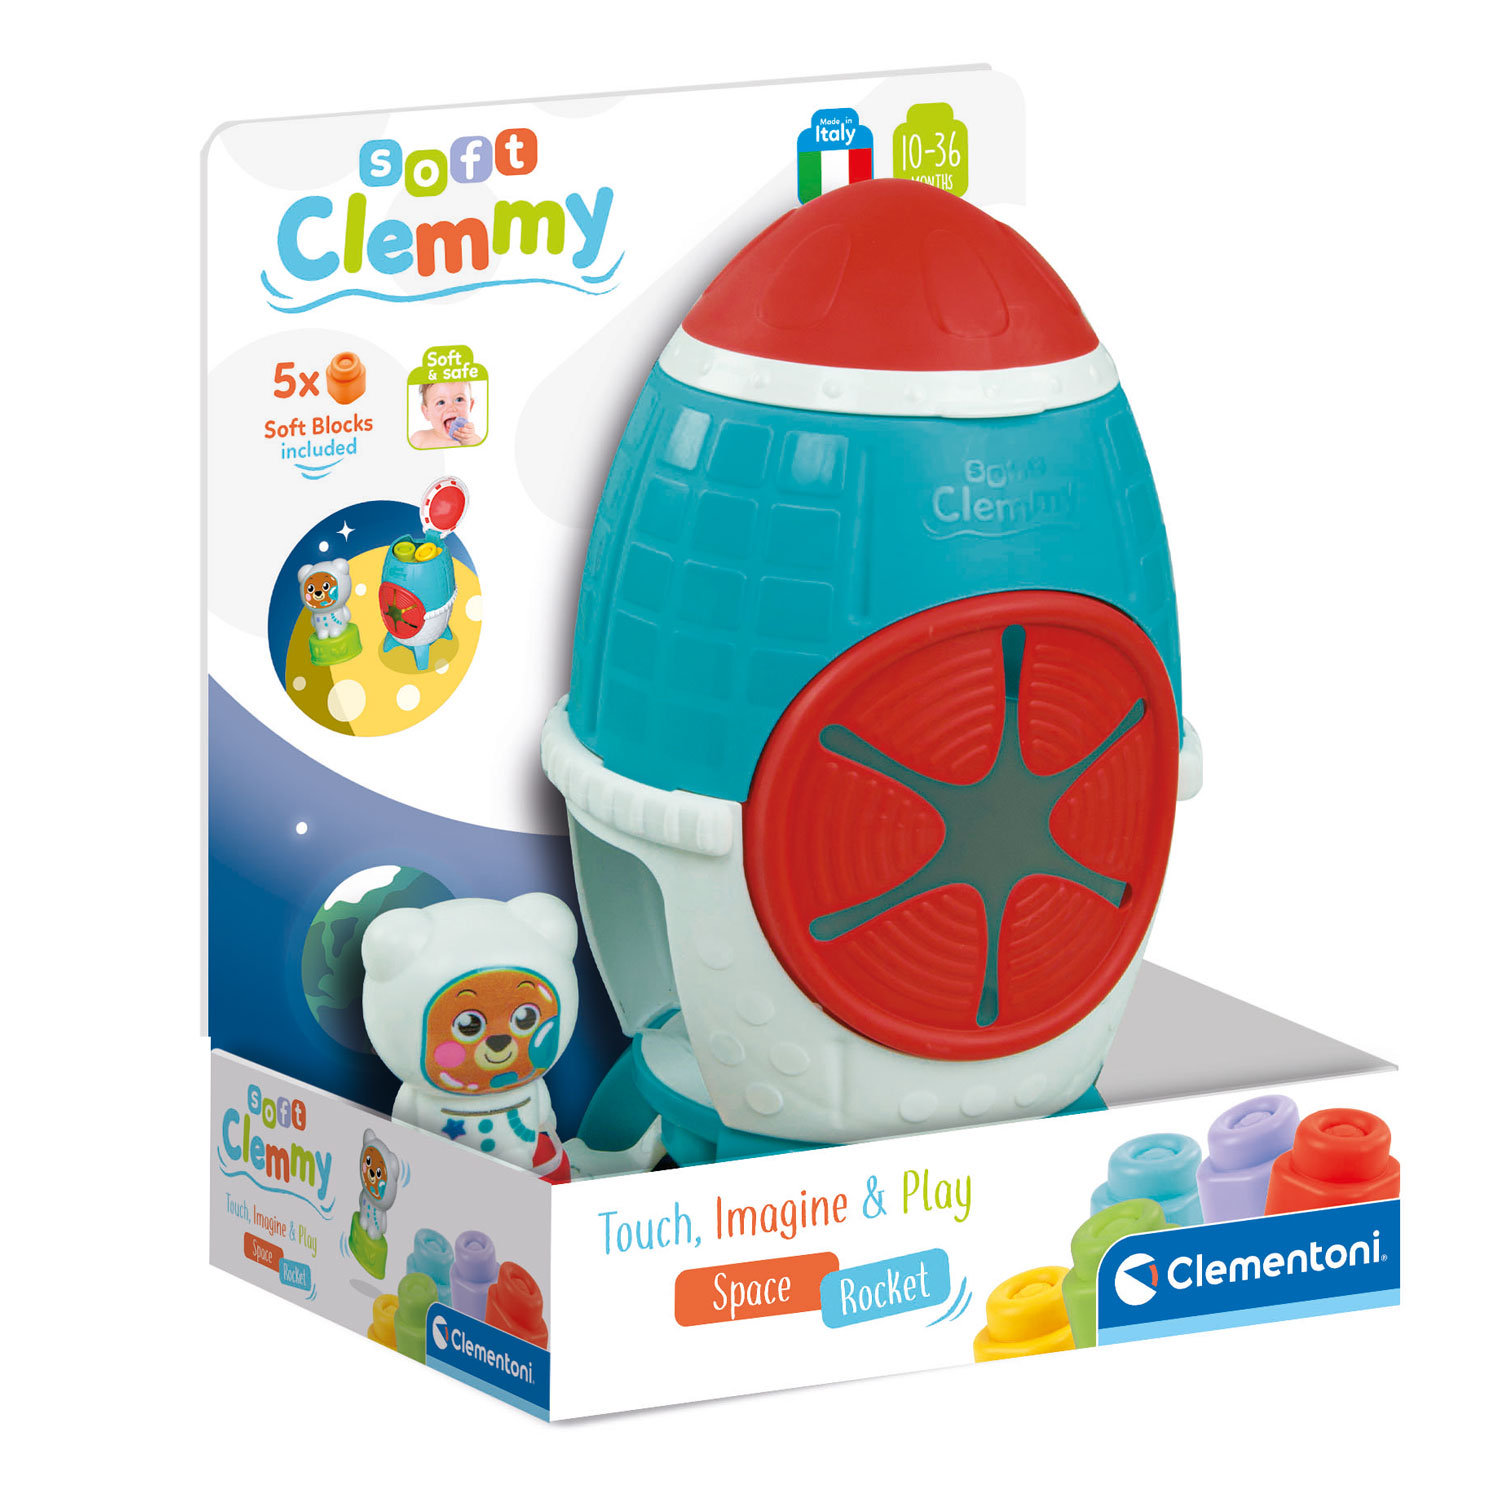 Baby Clementoni - Clemmy Rocket Bucket - 17806